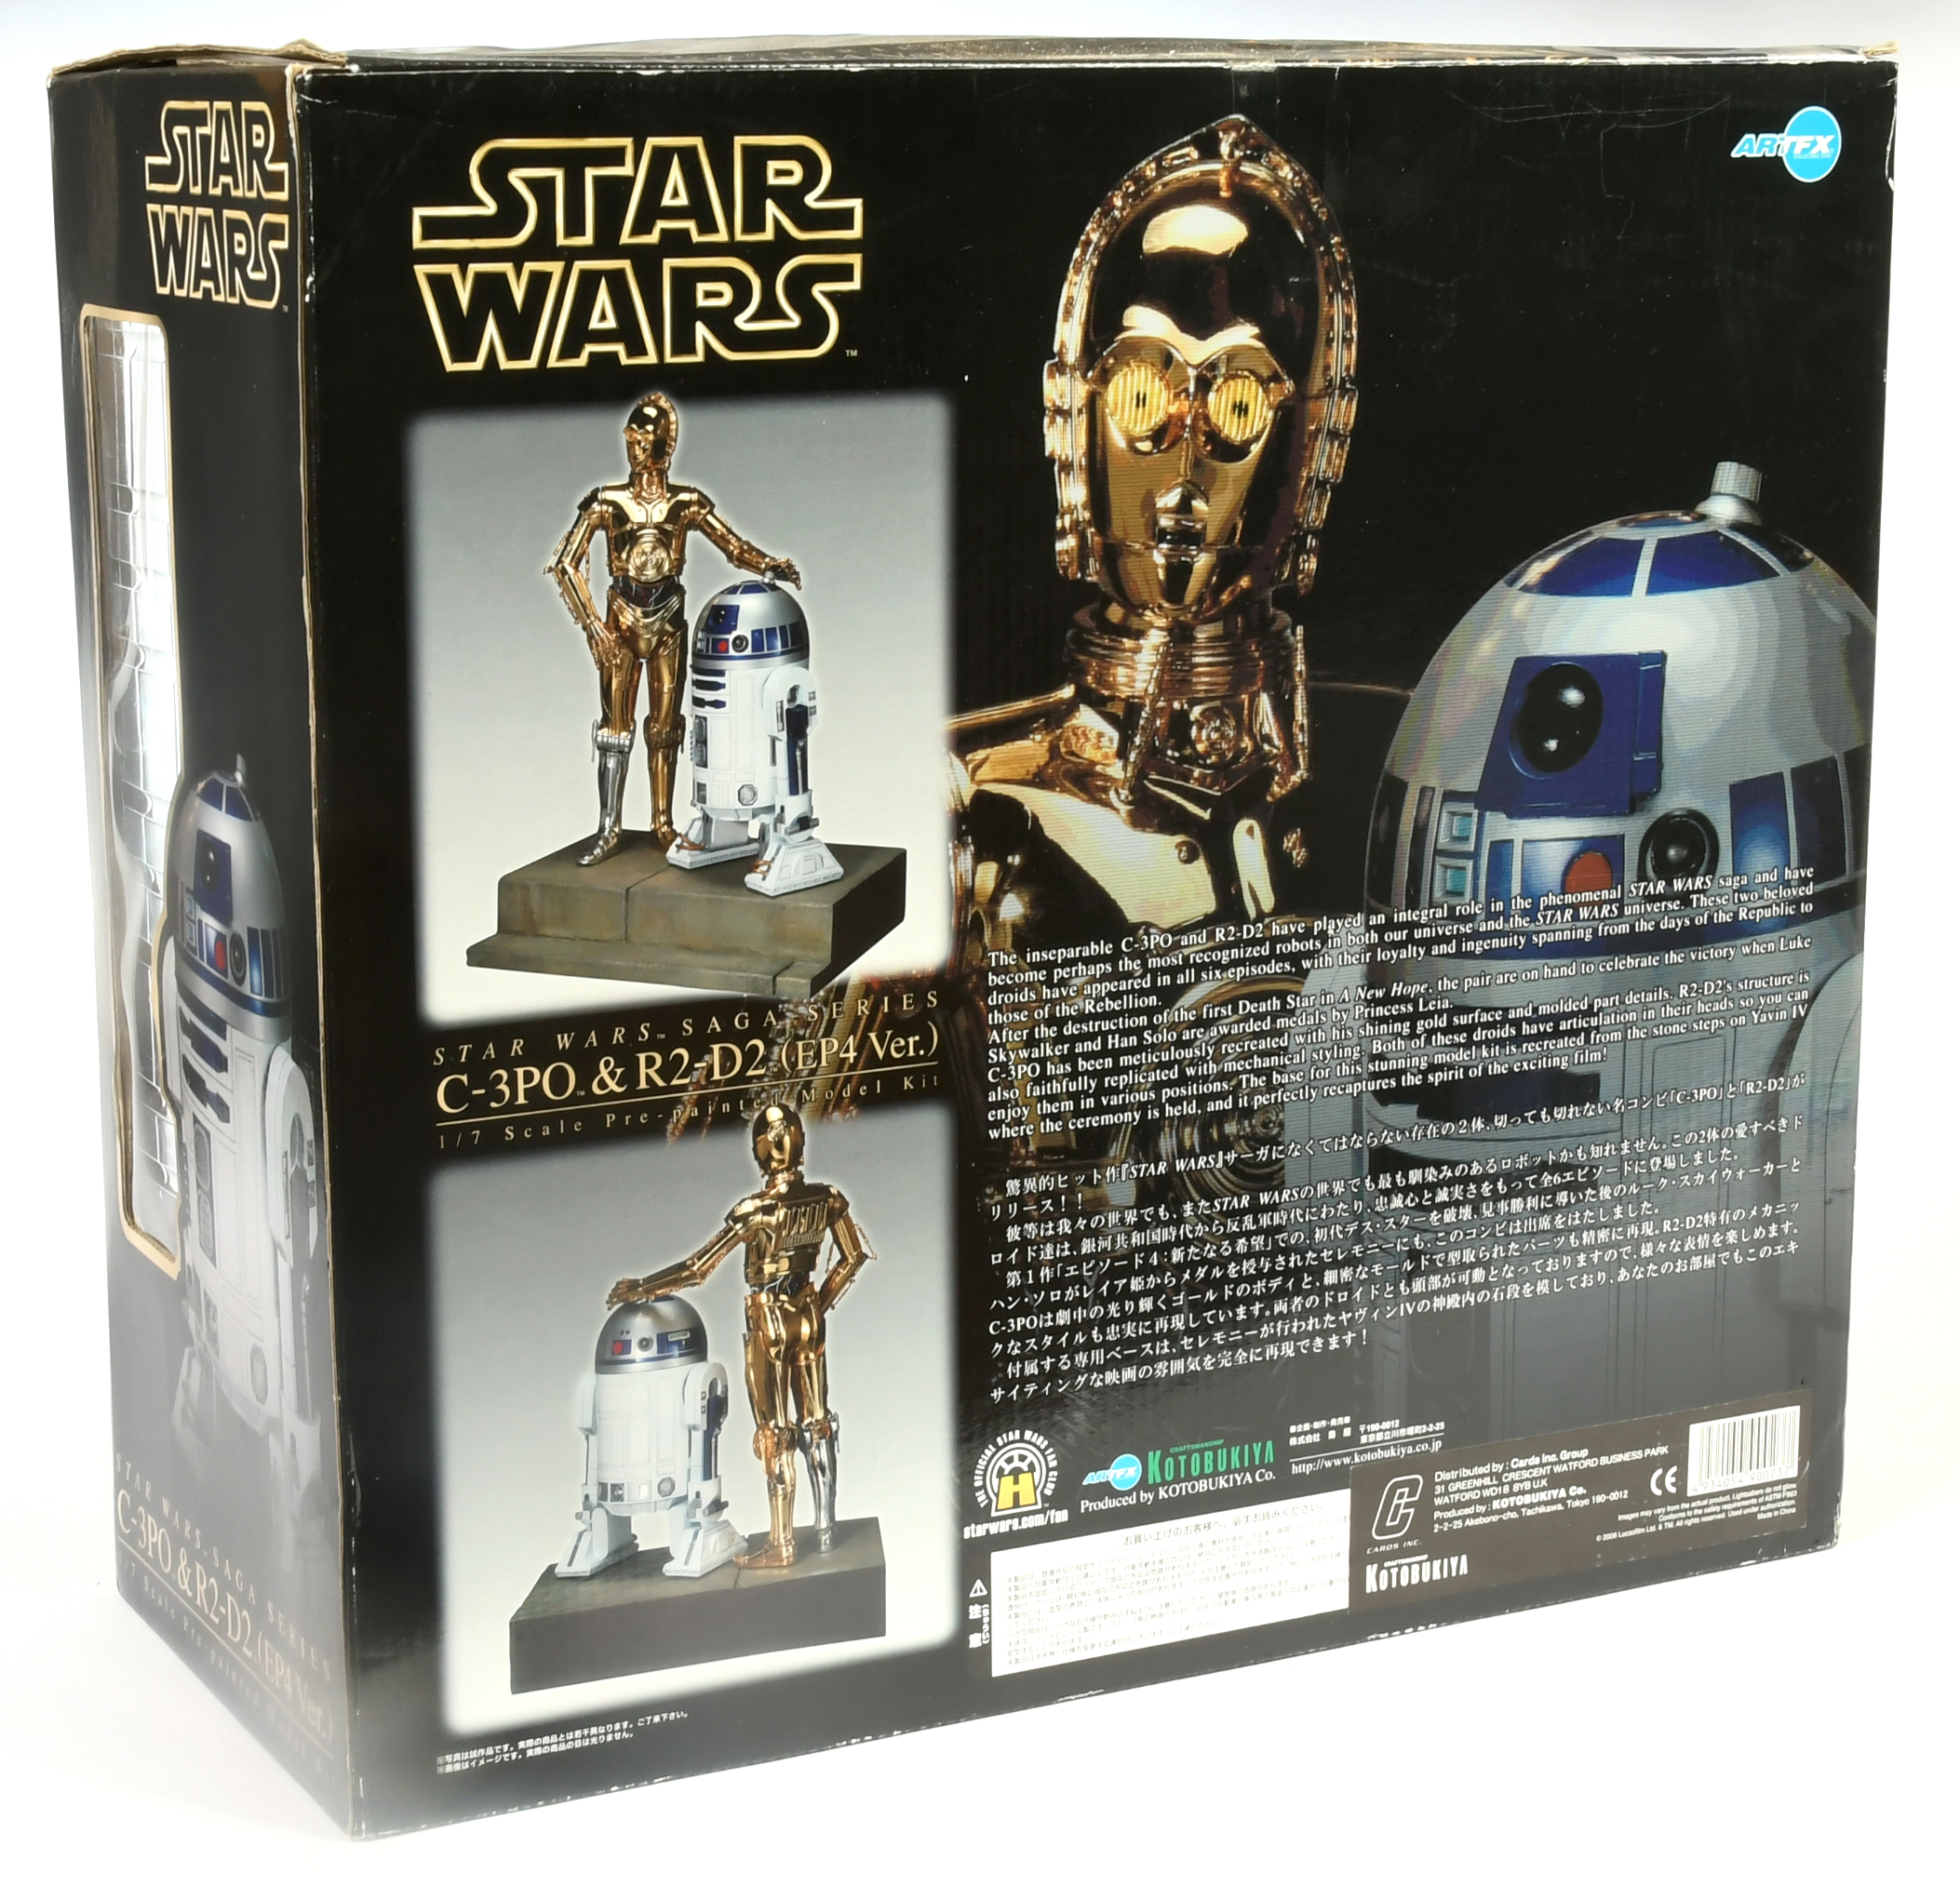 Kotobukiya ARTFX Star Wars C-3PO & R2-D2 EP4 version 1:7 scale pre-painted soft vinyl model kit s... - Image 2 of 2